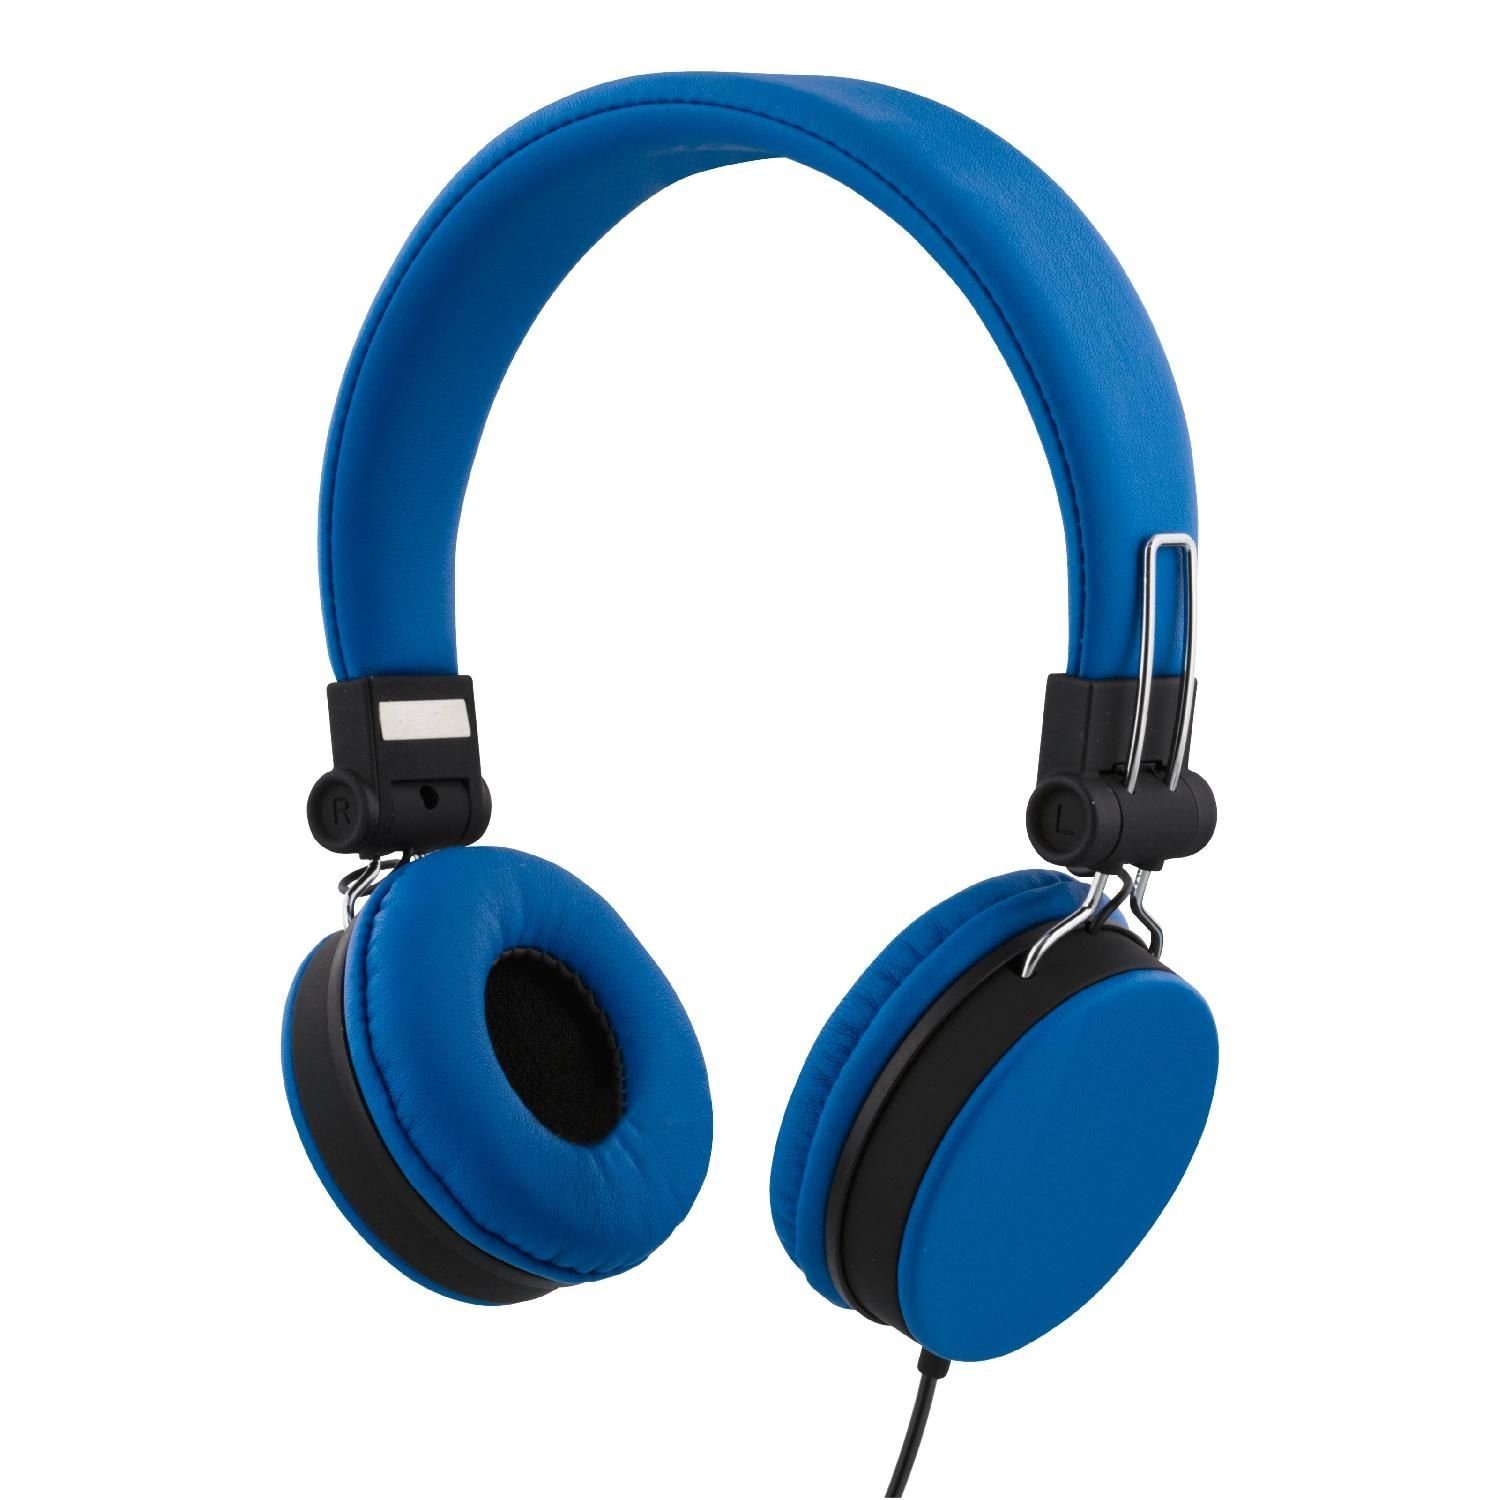 STREETZ Kopfhörer 1,2m Kabel 3.5mm Klinkenanschluss Ohrpolster On-Ear-Kopfhörer (integriertes Mikrofon, faltbares Headset, dunkelblau, inkl. 5 Jahre Herstellergarantie)